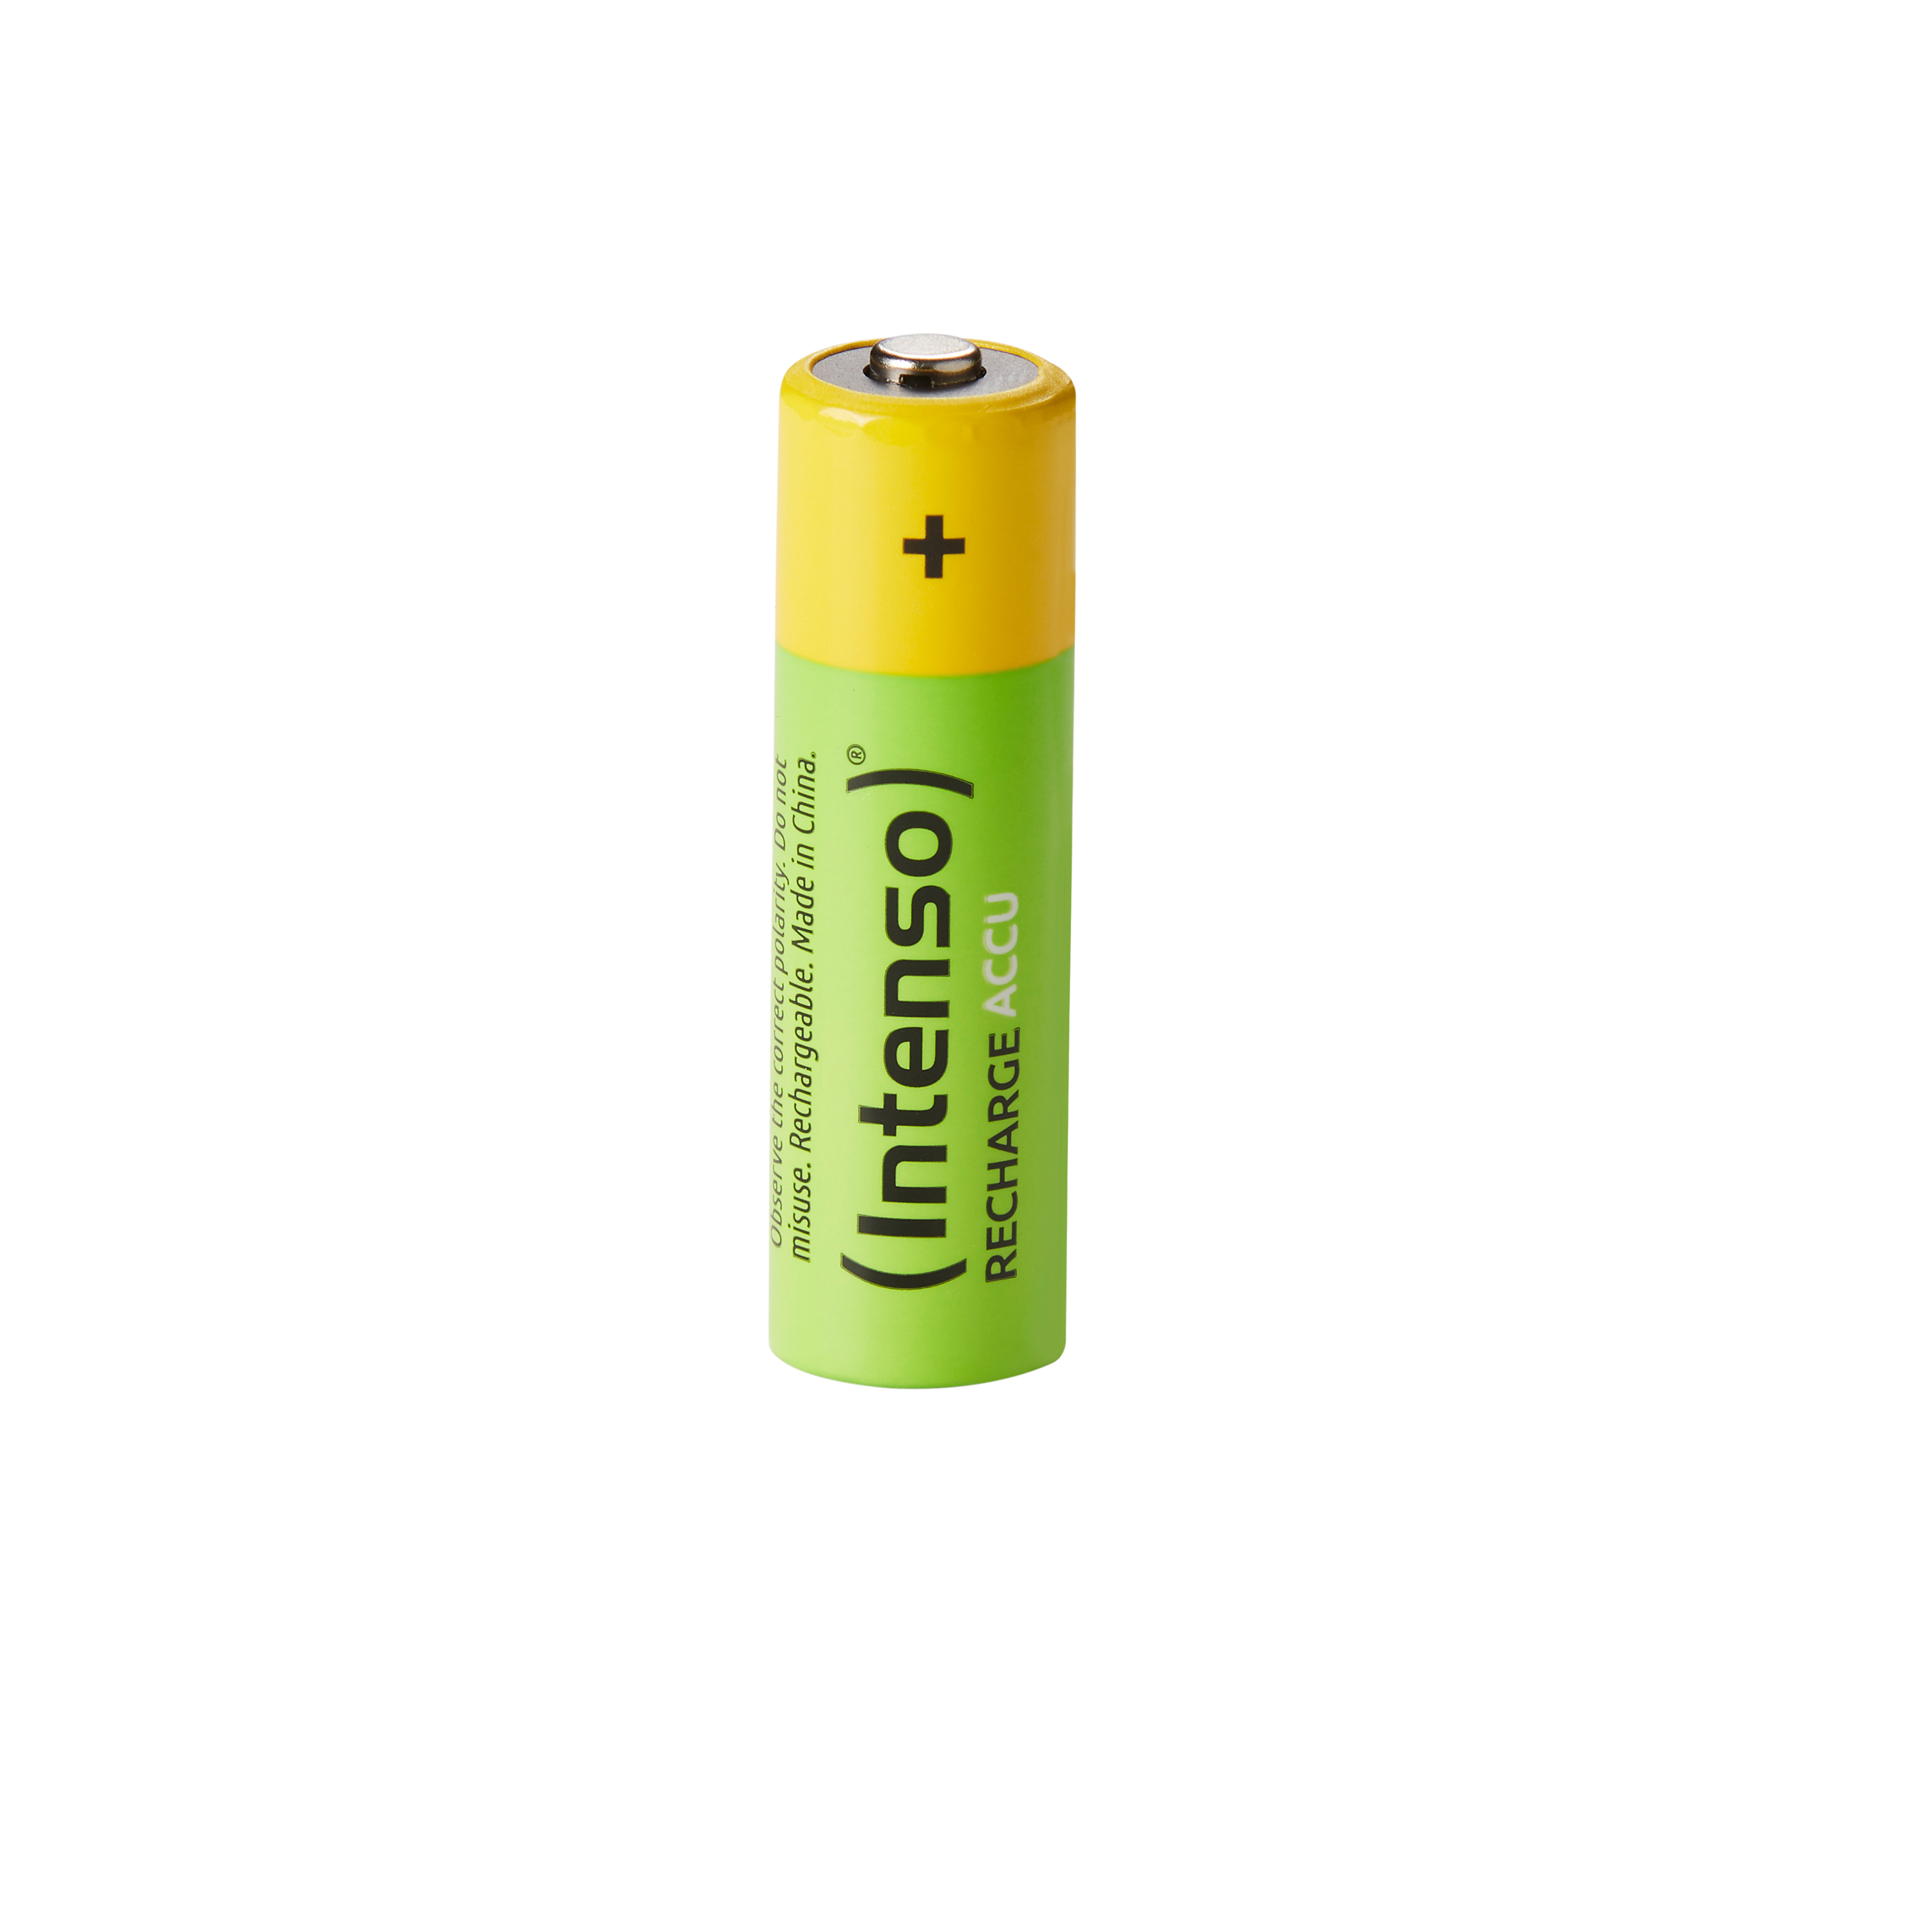 INTENSO Energy Eco Accu Pack AA, 2700 HR6, HR6 Mignon, (Nickel-Metallhydrid) AA NiMH mAh 2700 Batterie Batterie, 4er mAh Wiederaufladbare